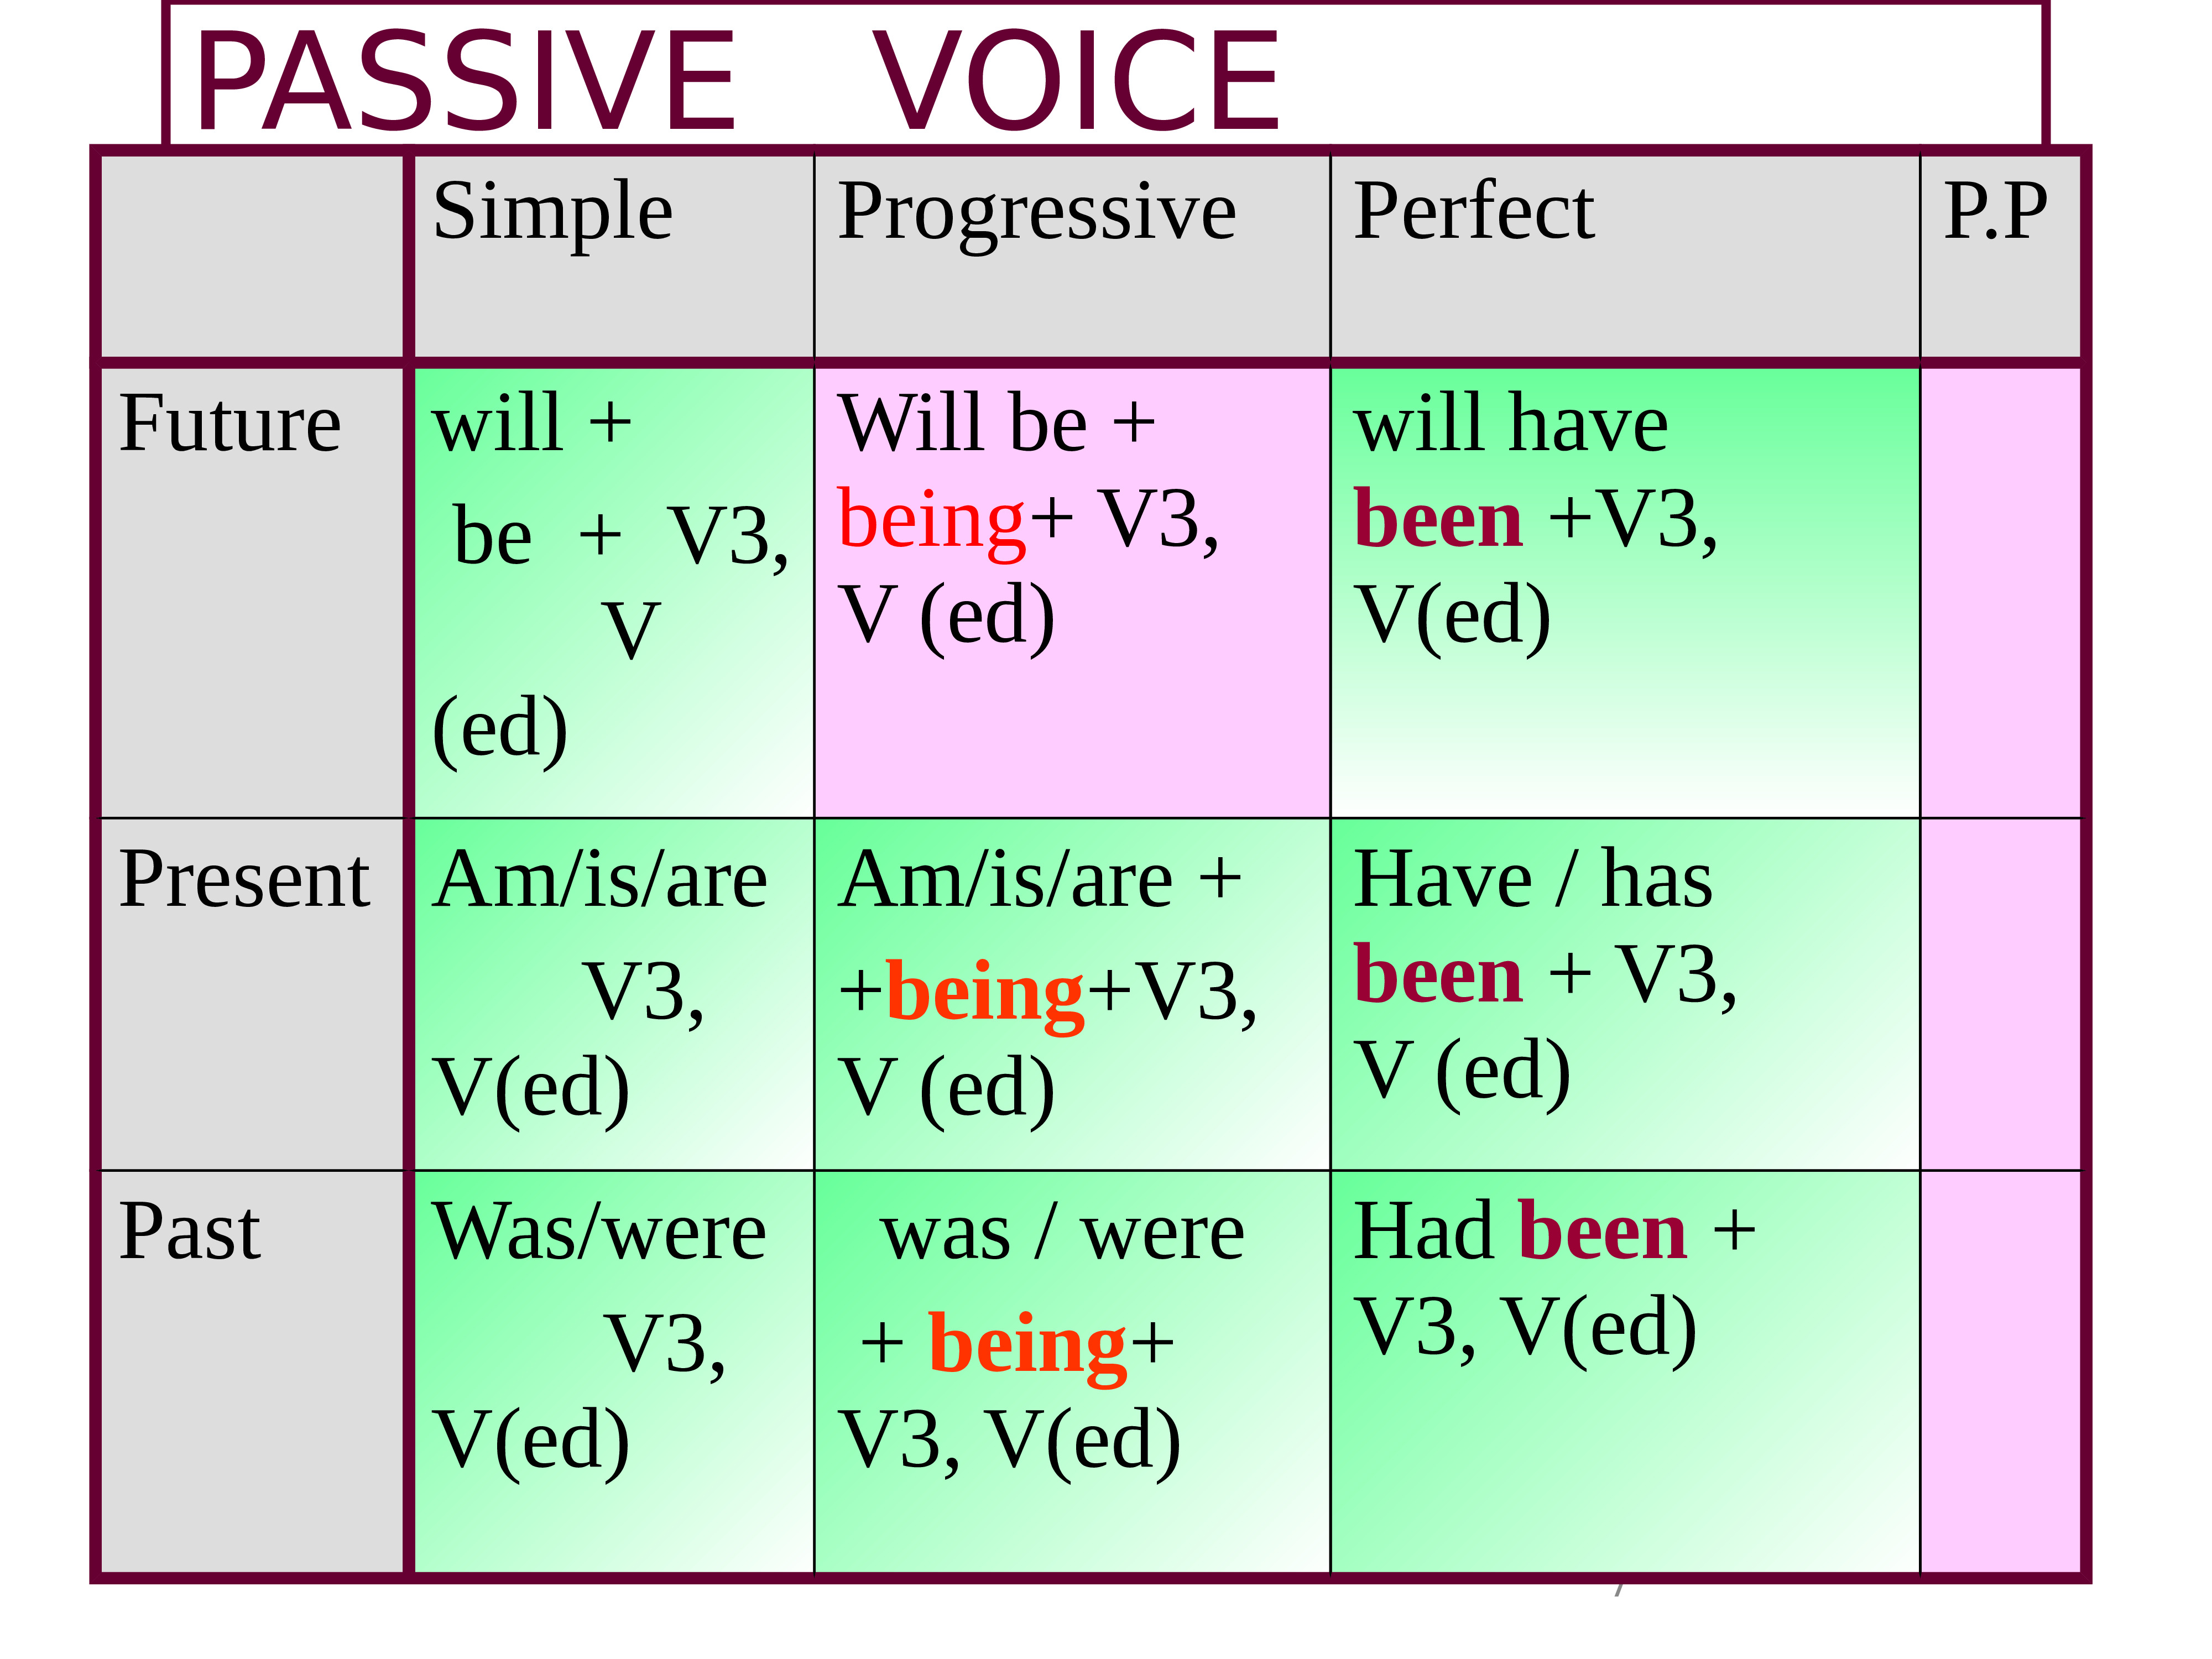 Passive voice play. Passive страдательный залог. Пассивный залог (Passive Voice). Формула present Passive Voice. Формула пассивного залога в английском.